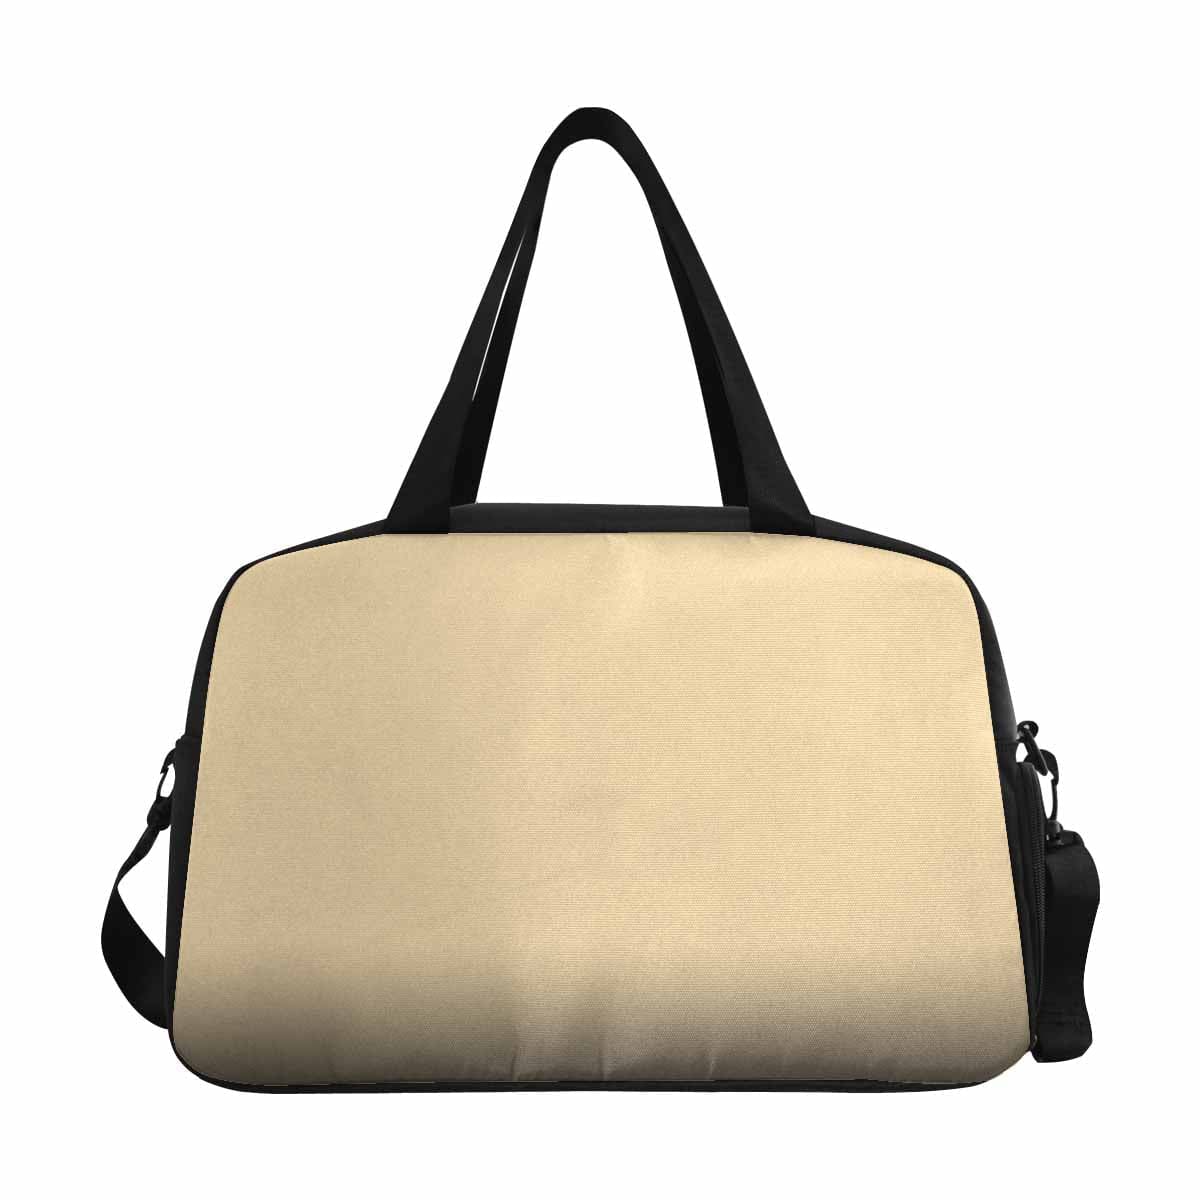 Peach Tote And Crossbody Travel Bag - Bags | Travel Bags | Crossbody